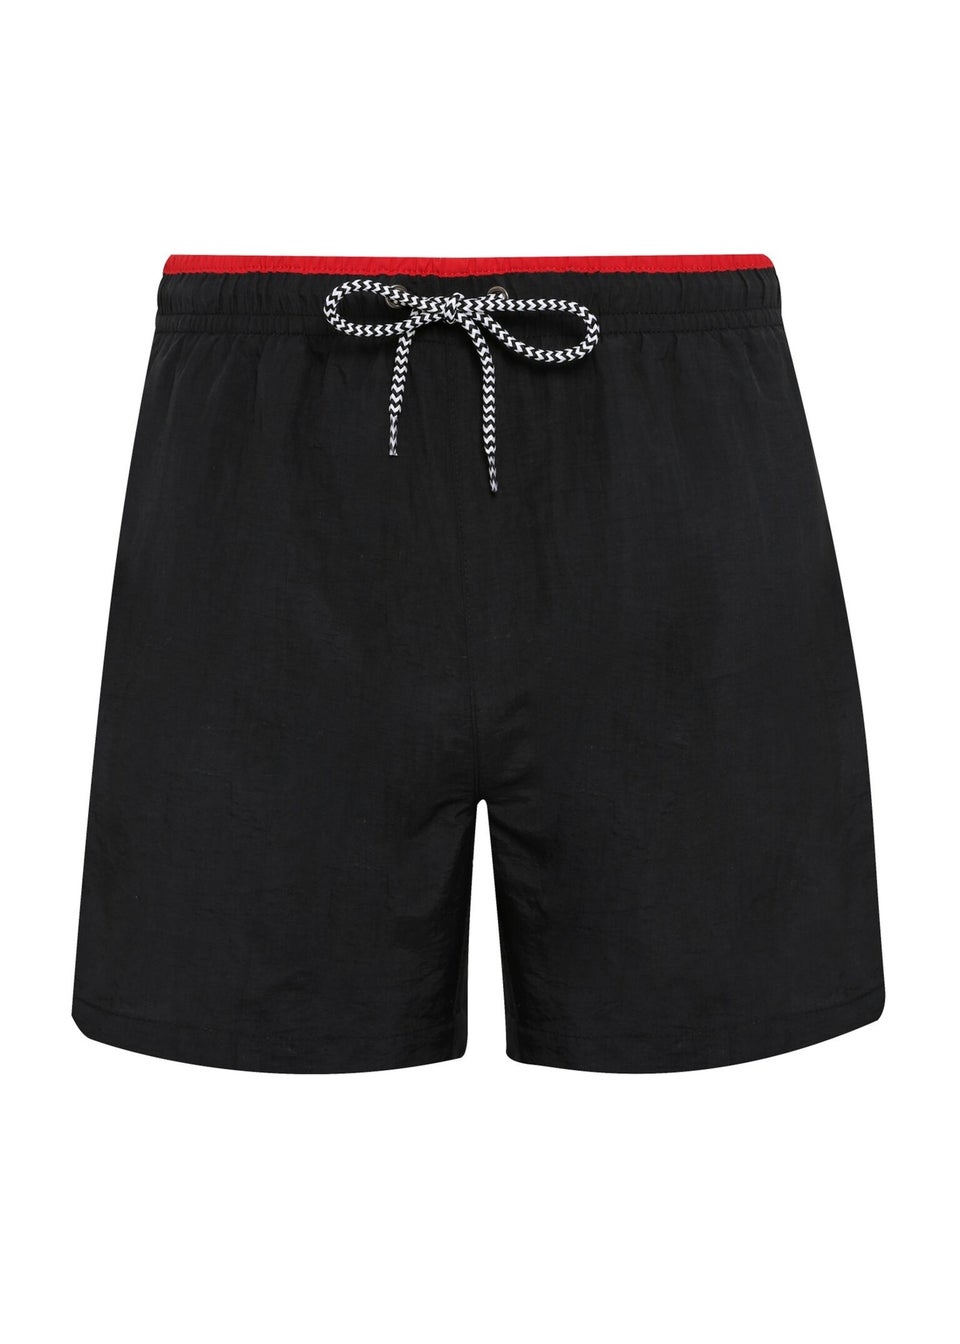 Asquith & Fox Black/Red Swim Shorts